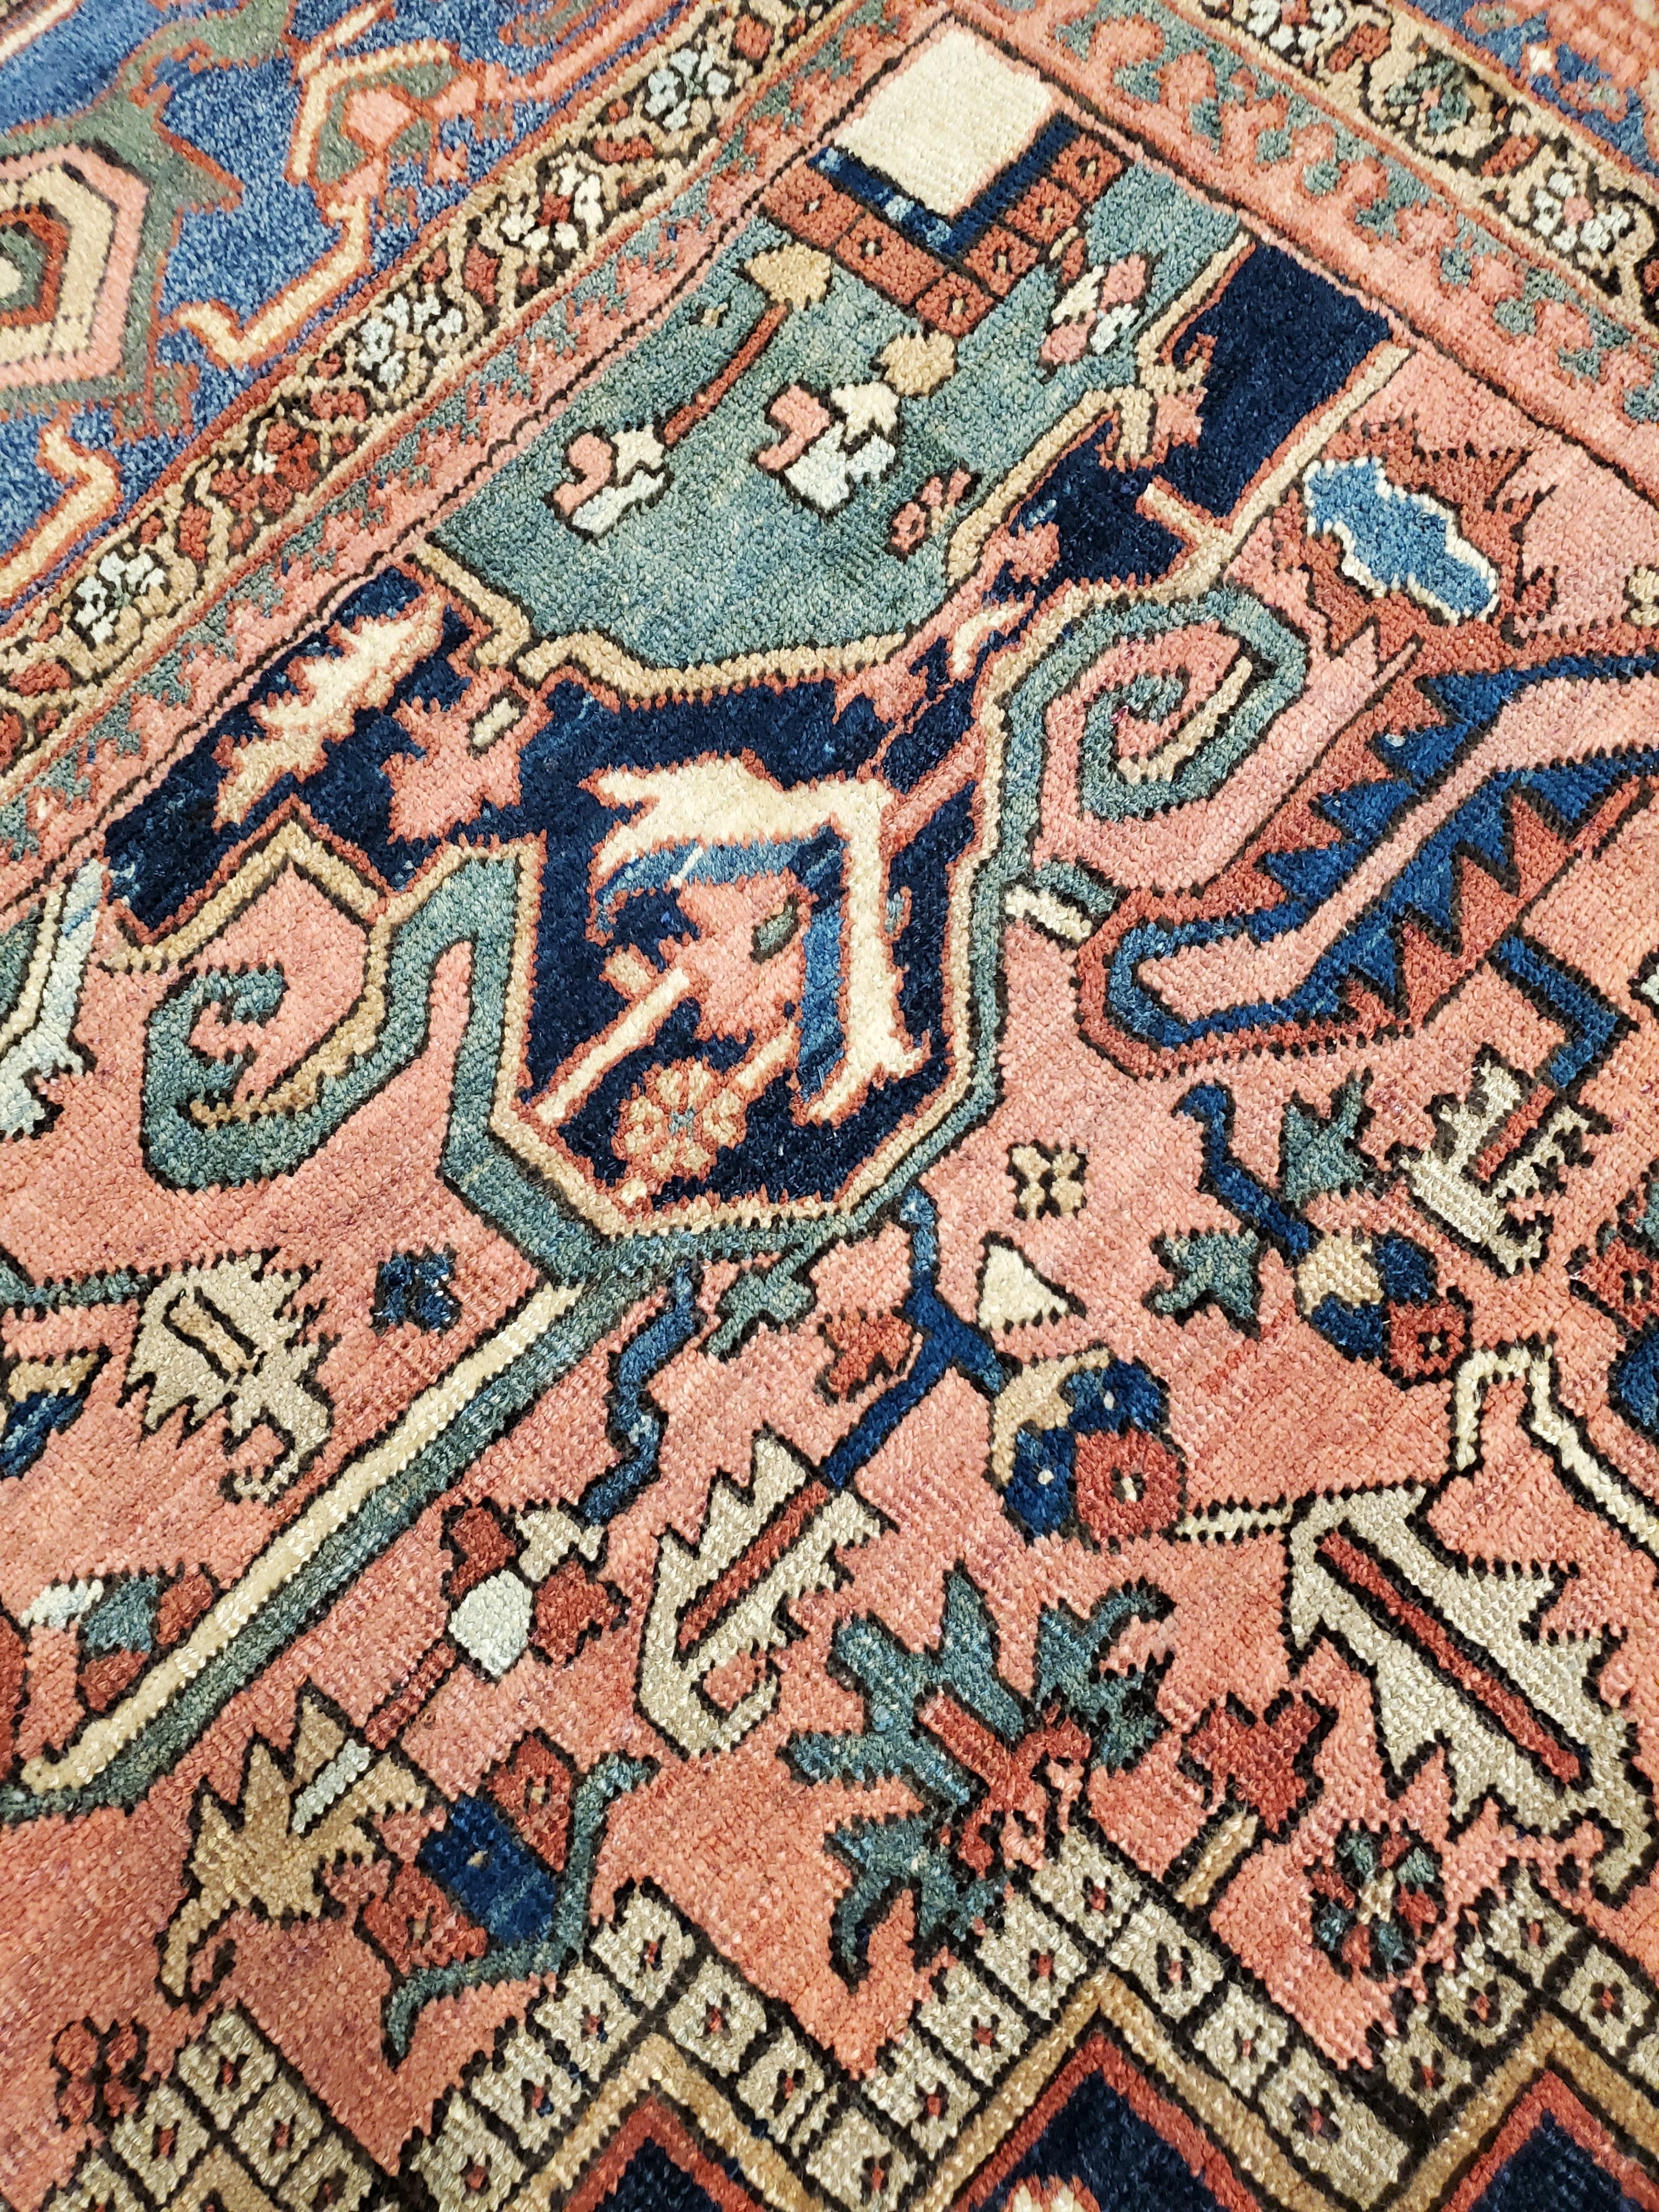 Antique Persian Heriz Carpet Handmade Wool Oriental Rug, Rust, Navy, Light Blue For Sale 2